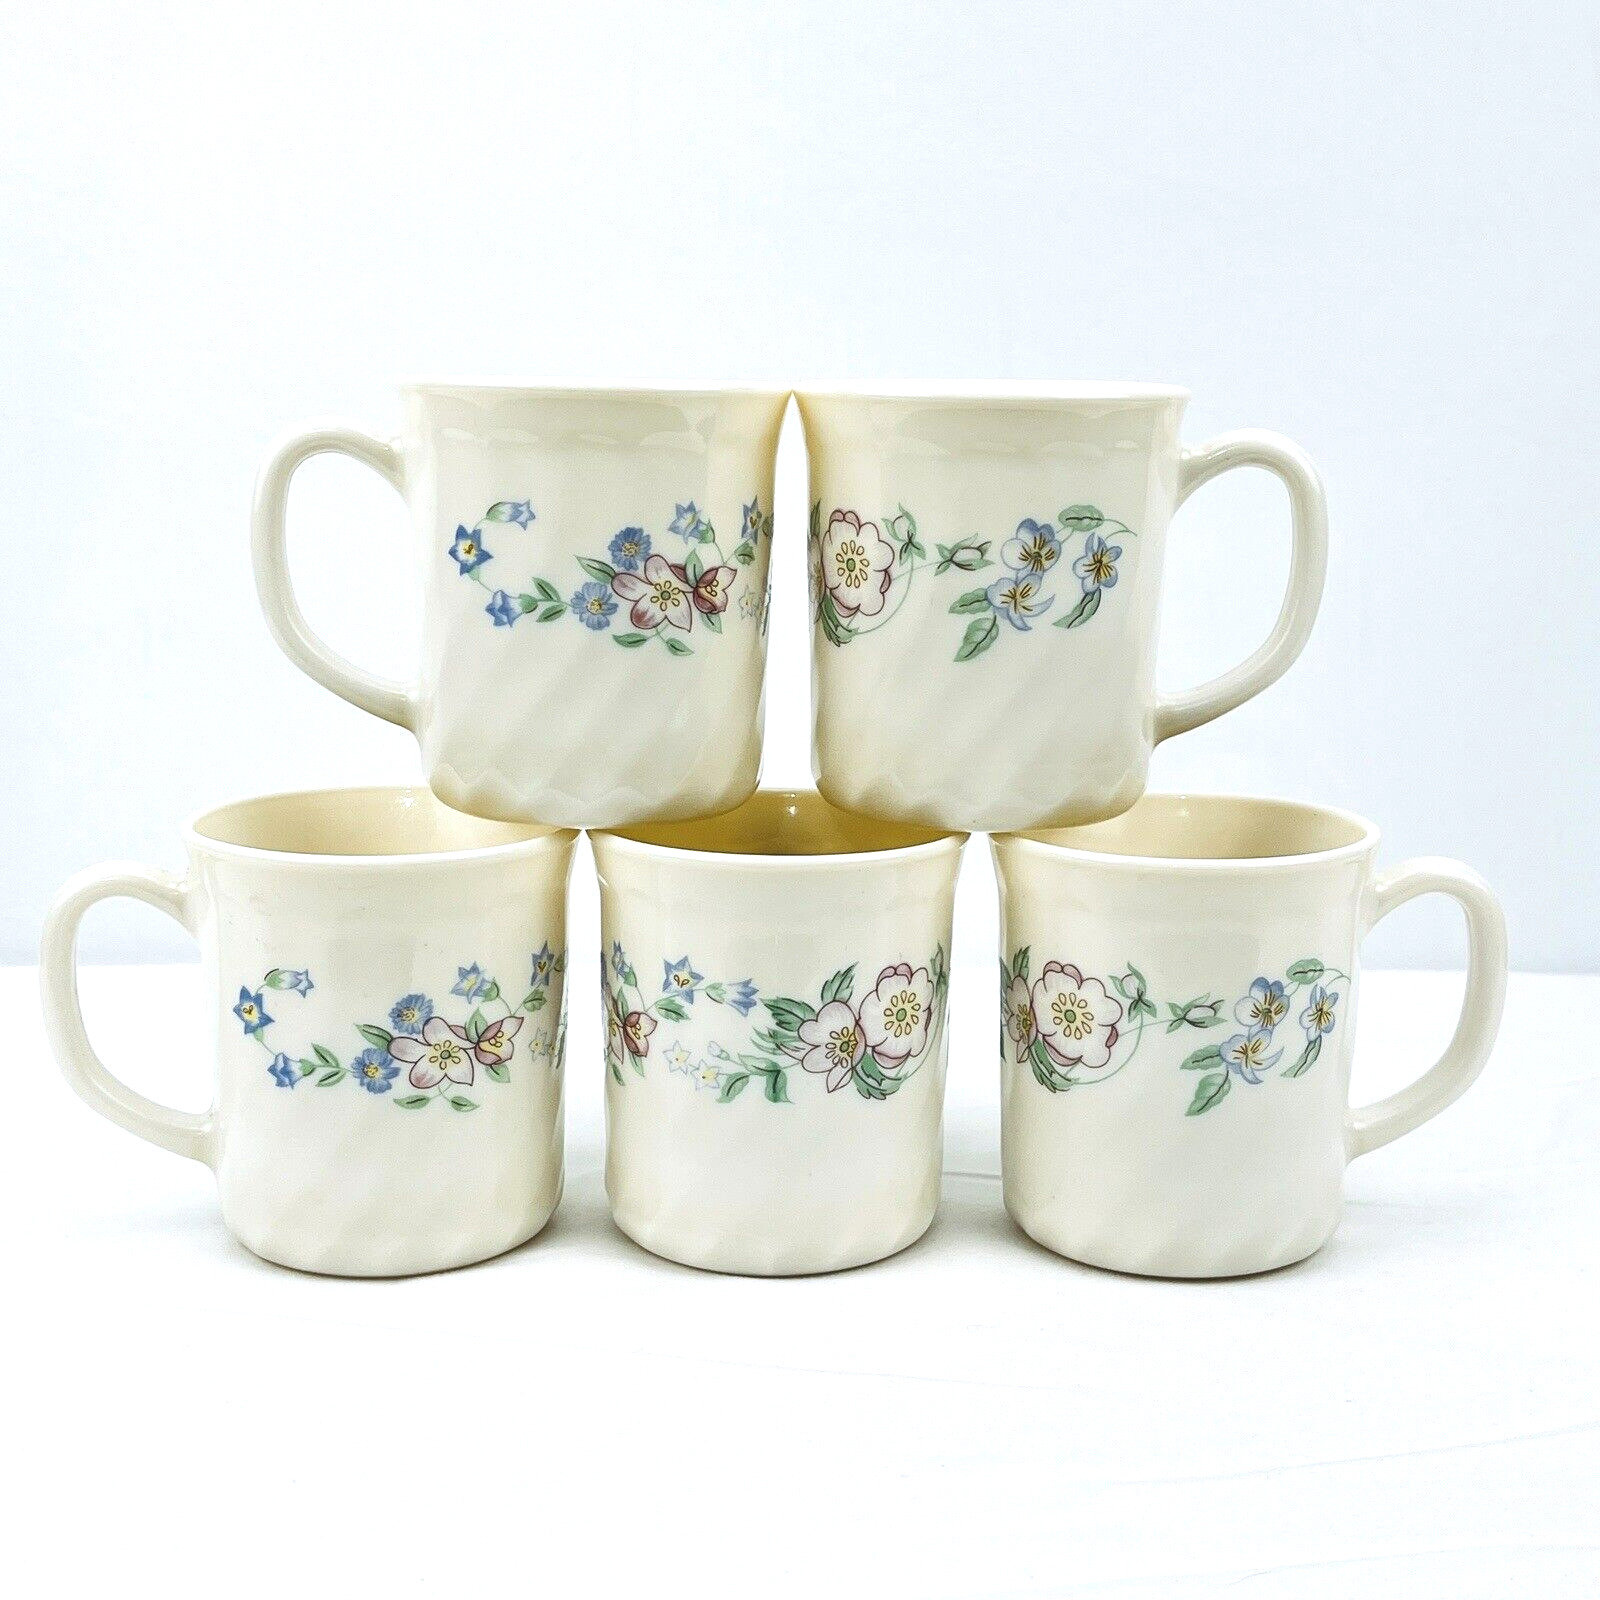 5x Set Arcopal Champetre France Floral Swirl Milk Glass Coffee Cups Mugs 8 Oz